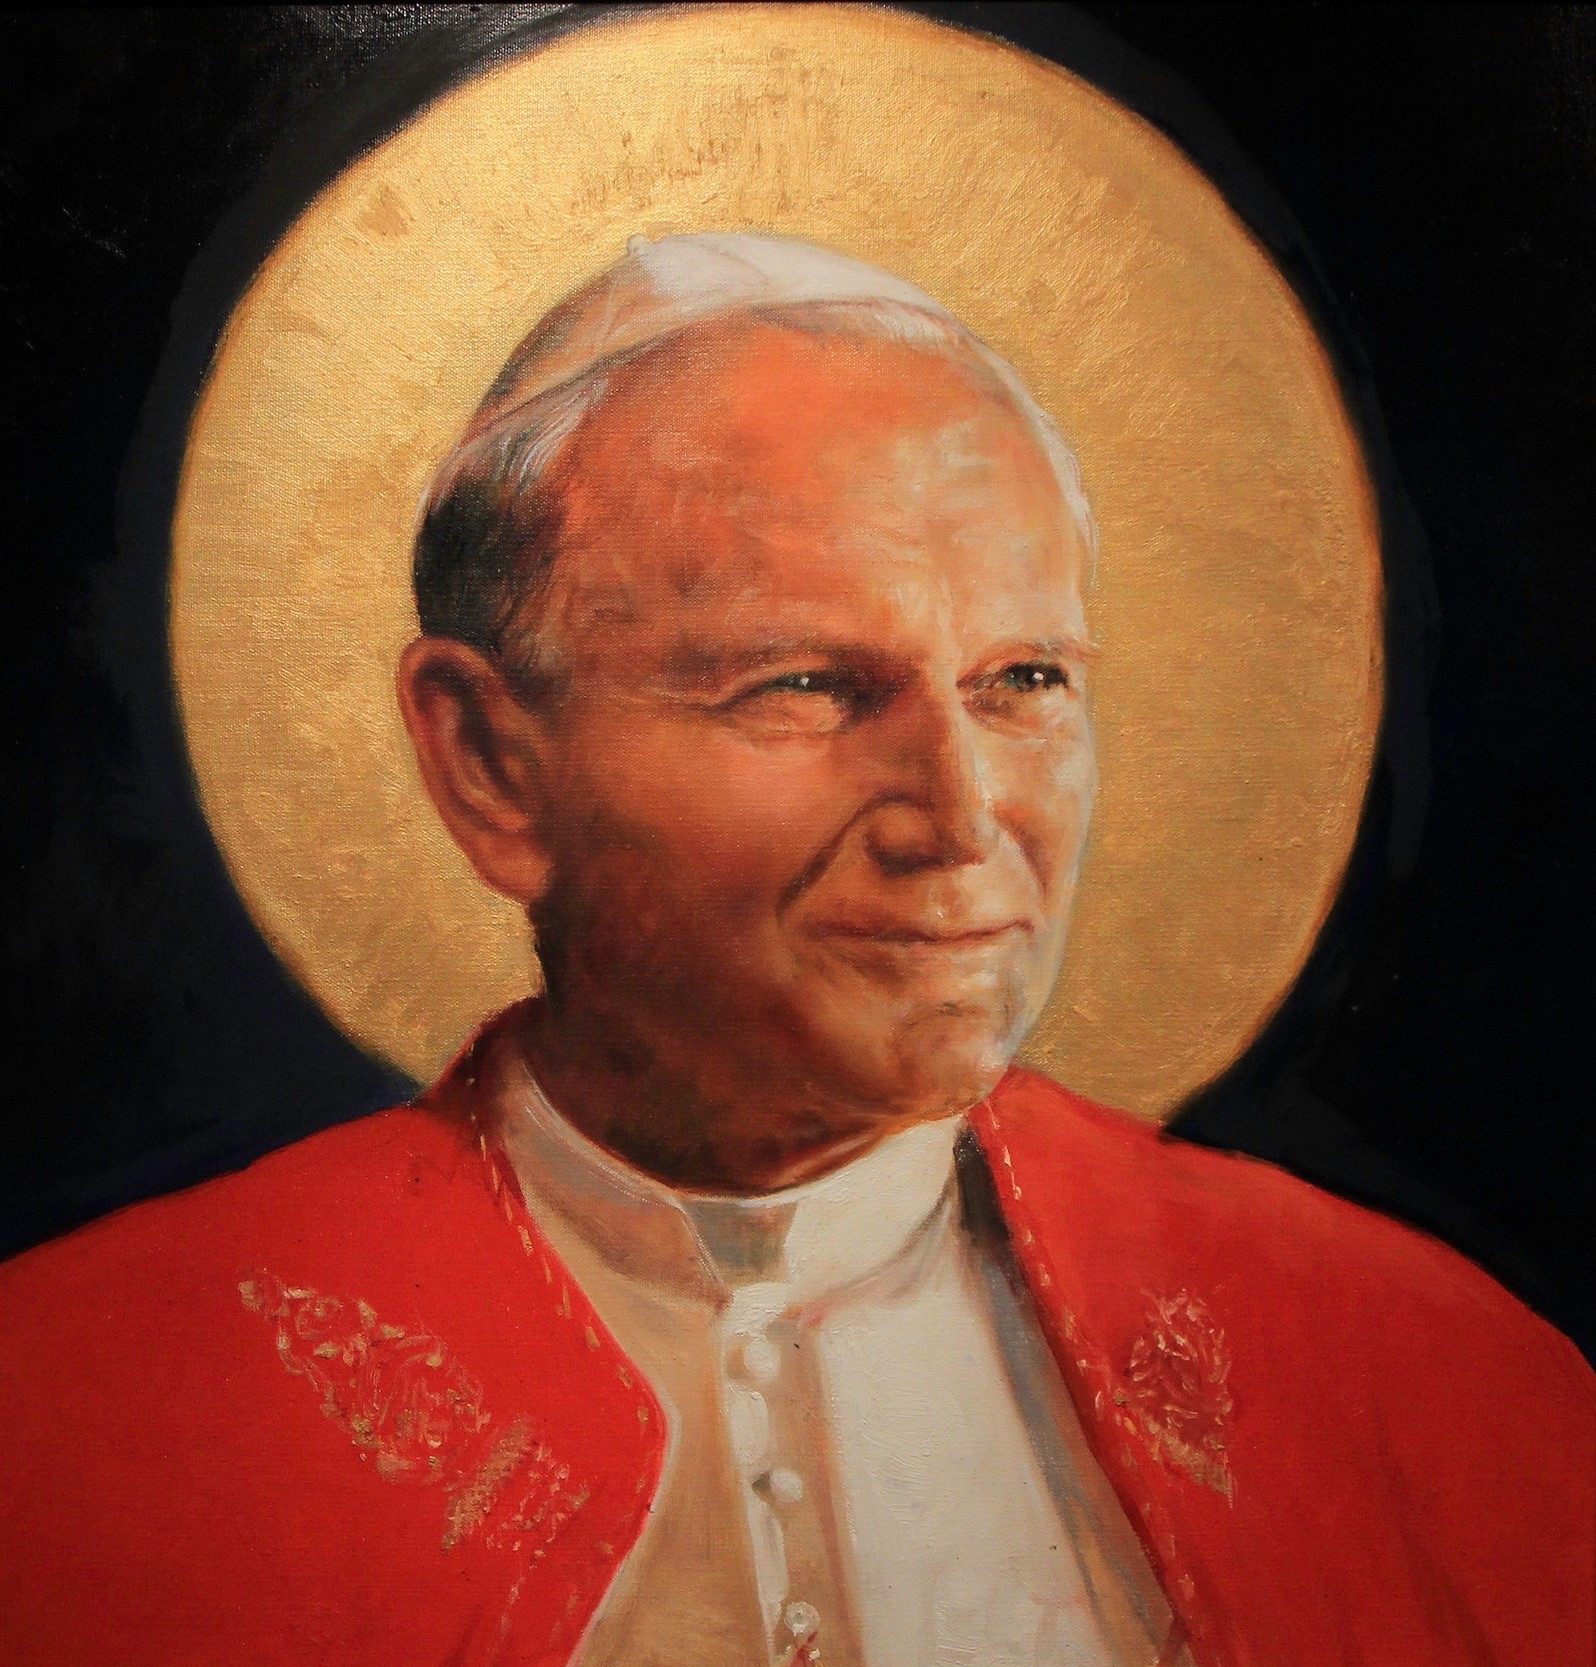 St. Pope John Paul II Explains His Motto: “Totus Tuus”